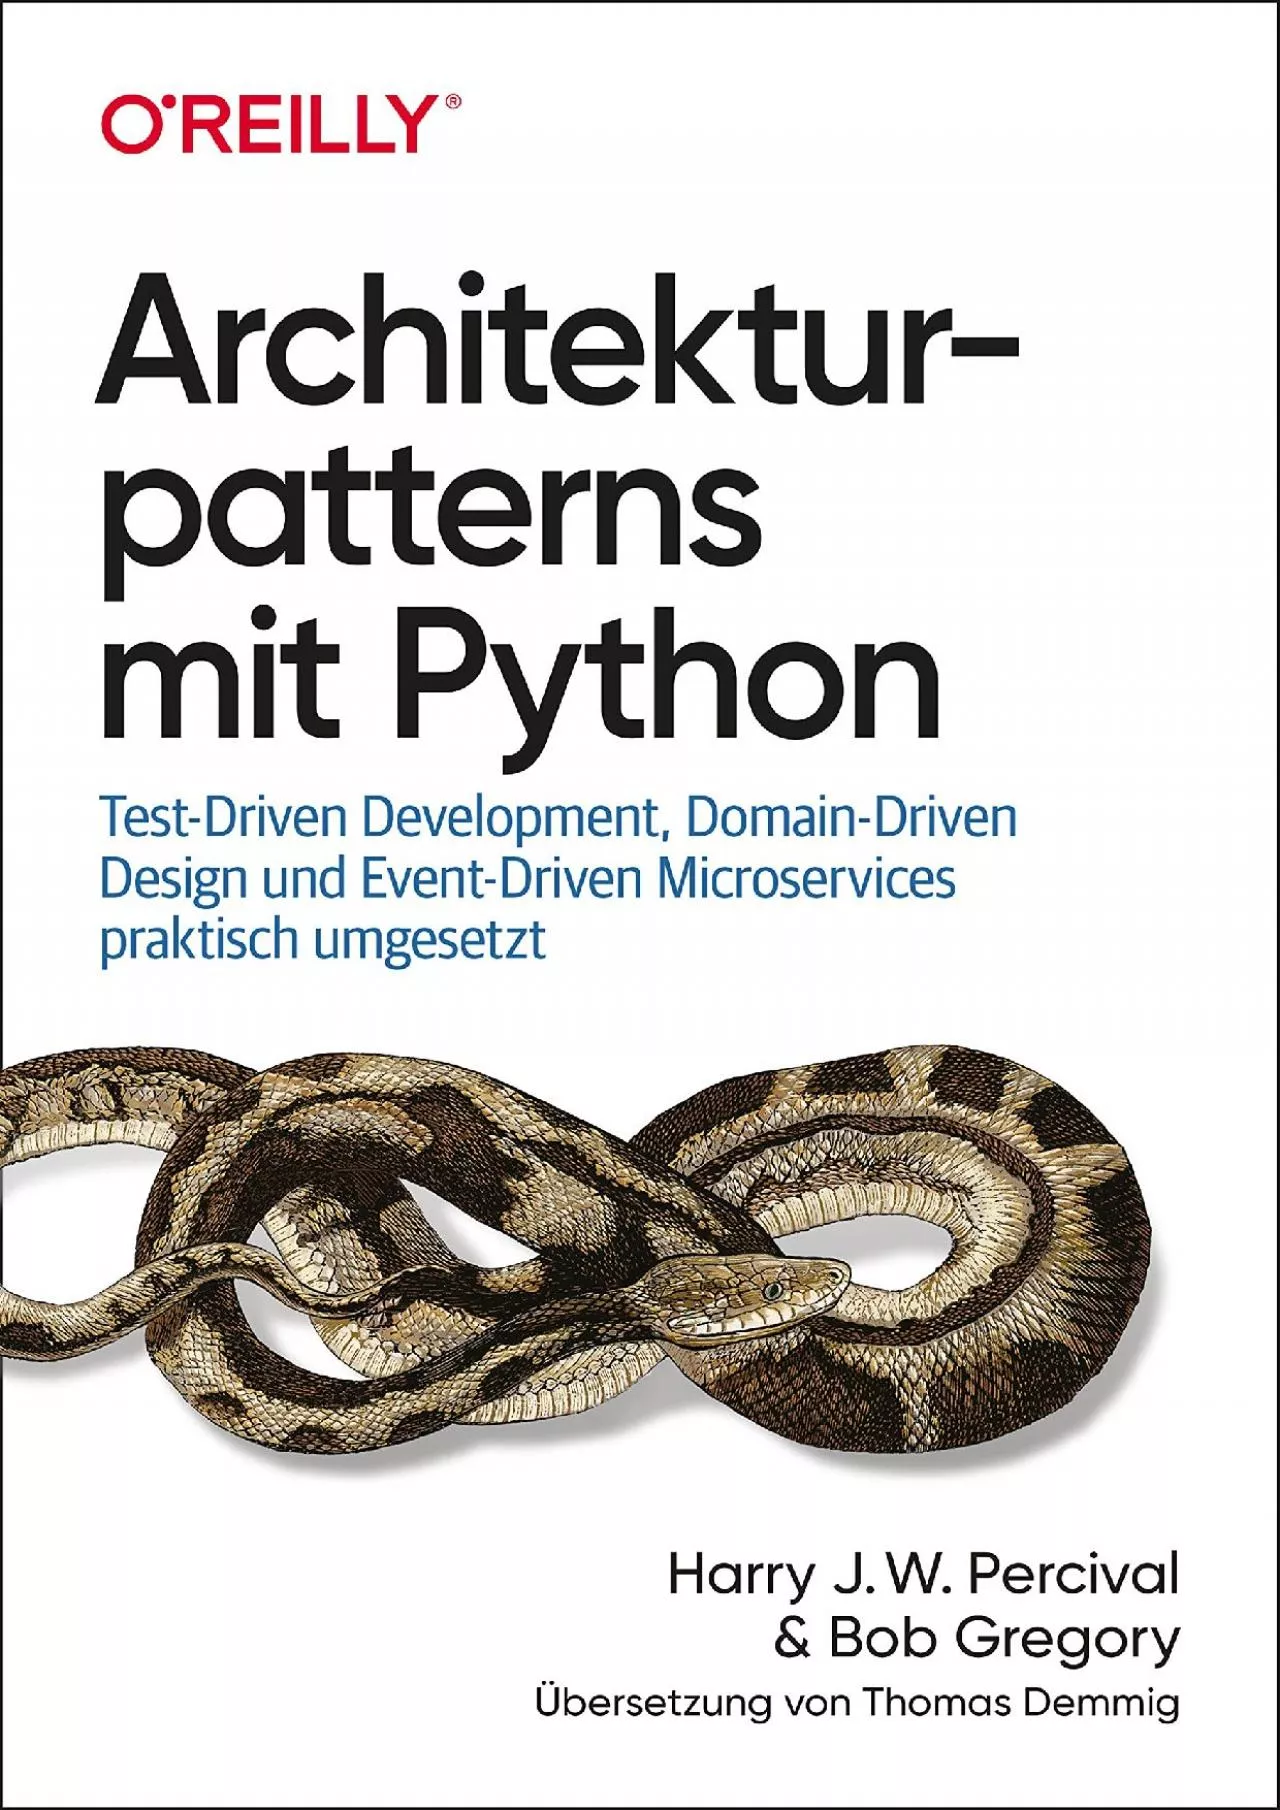 [READING BOOK]-Architekturpatterns mit Python Test-Driven Development, Domain-Driven Design